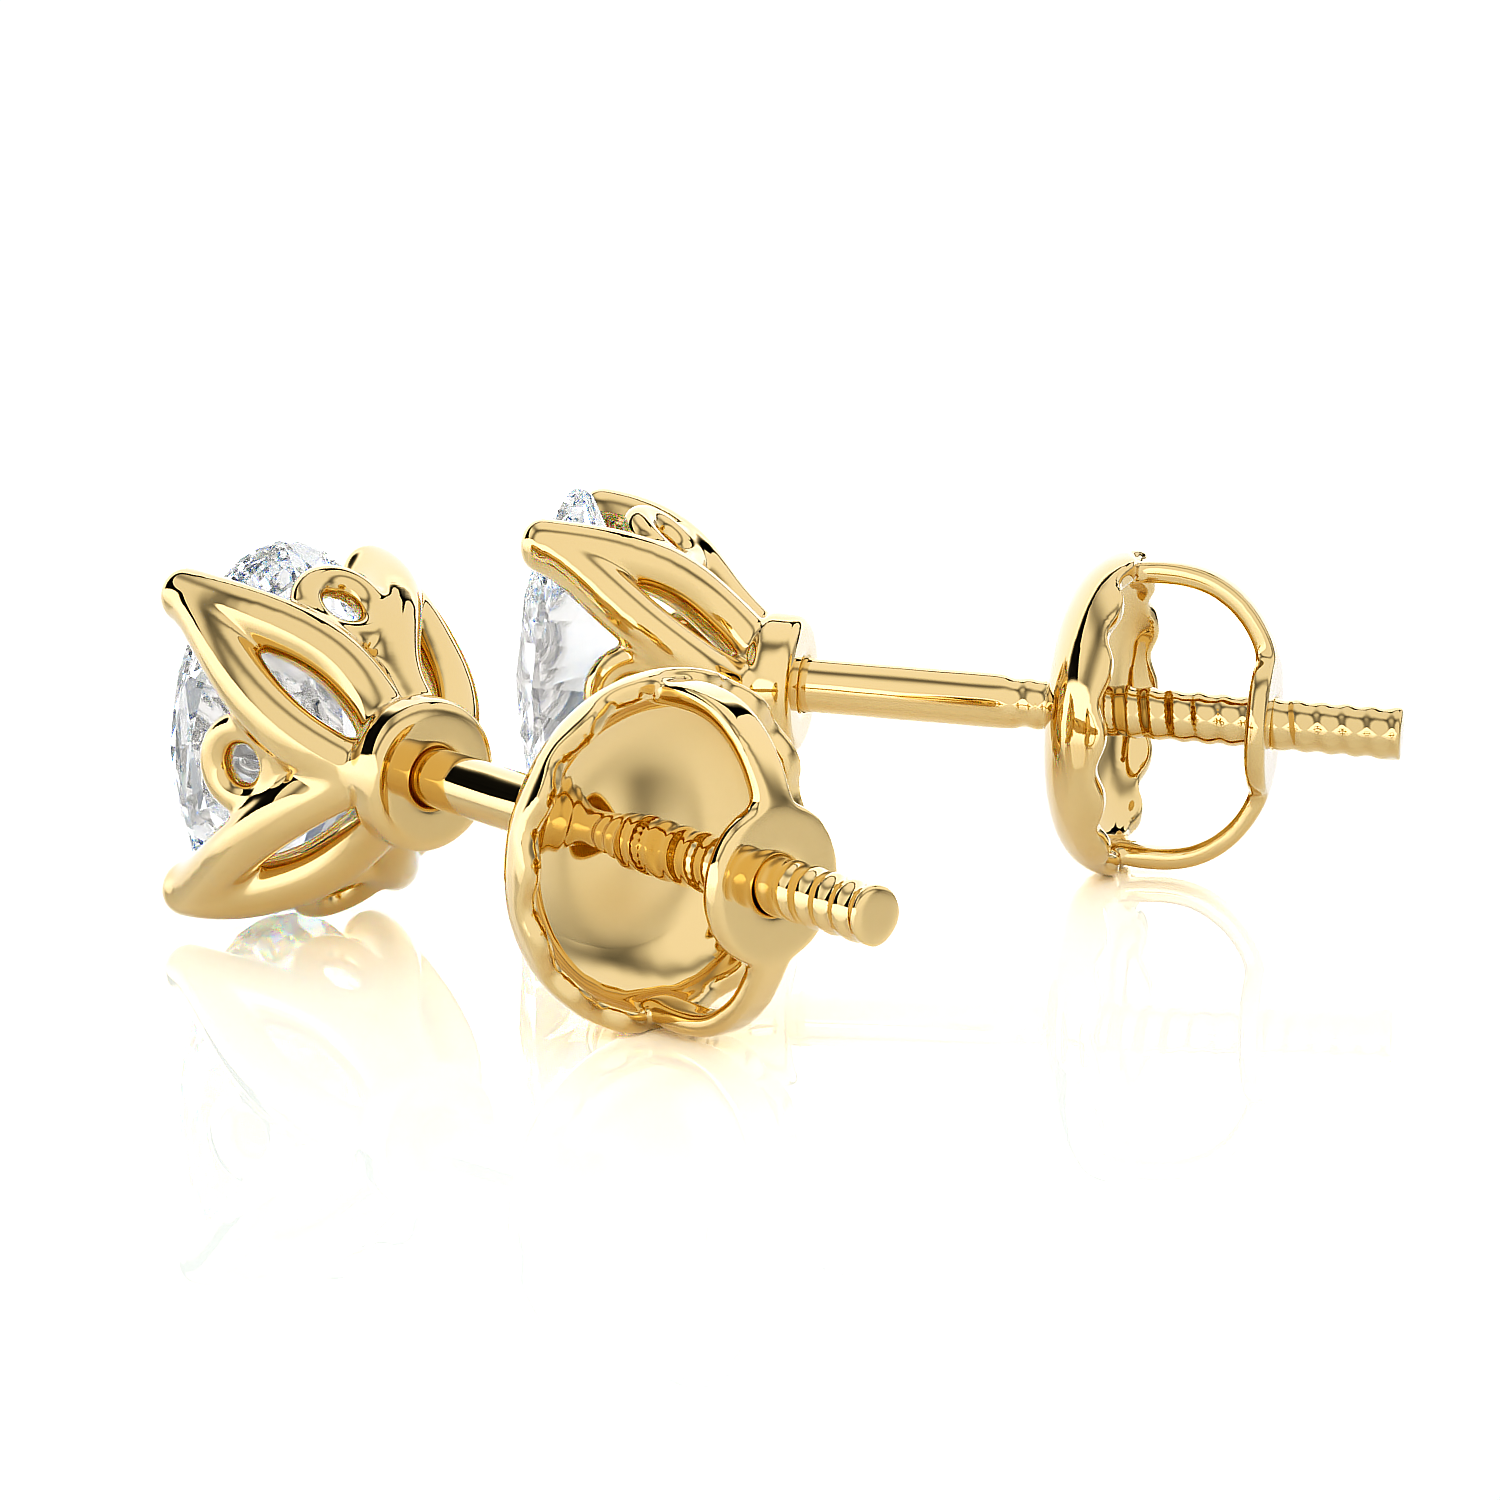 Oval Lab Grown Diamond Solitaire Stud Earrings